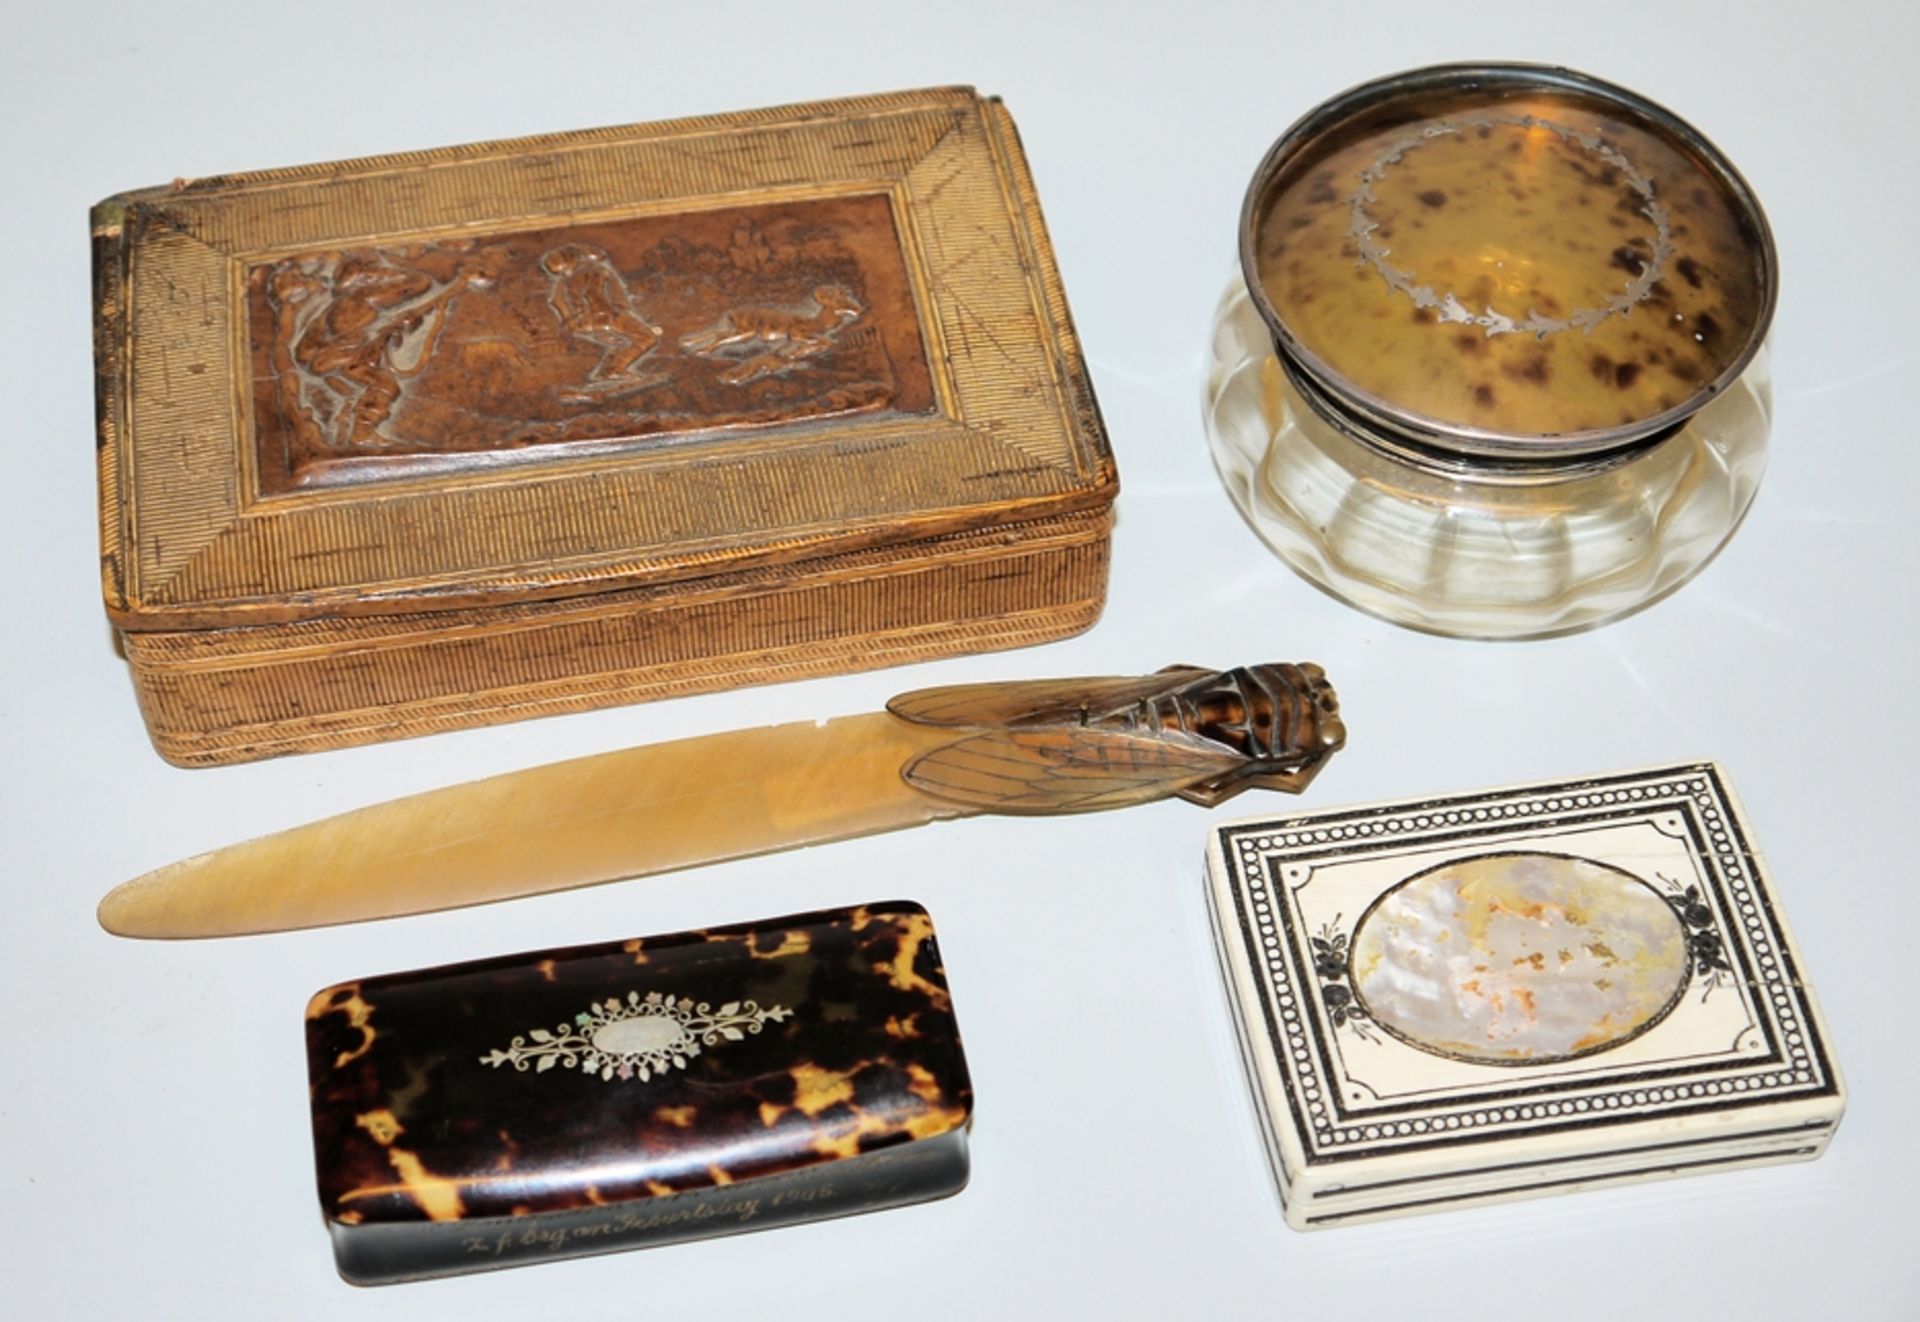 Five utensils of the Biedermeier period up to 1900